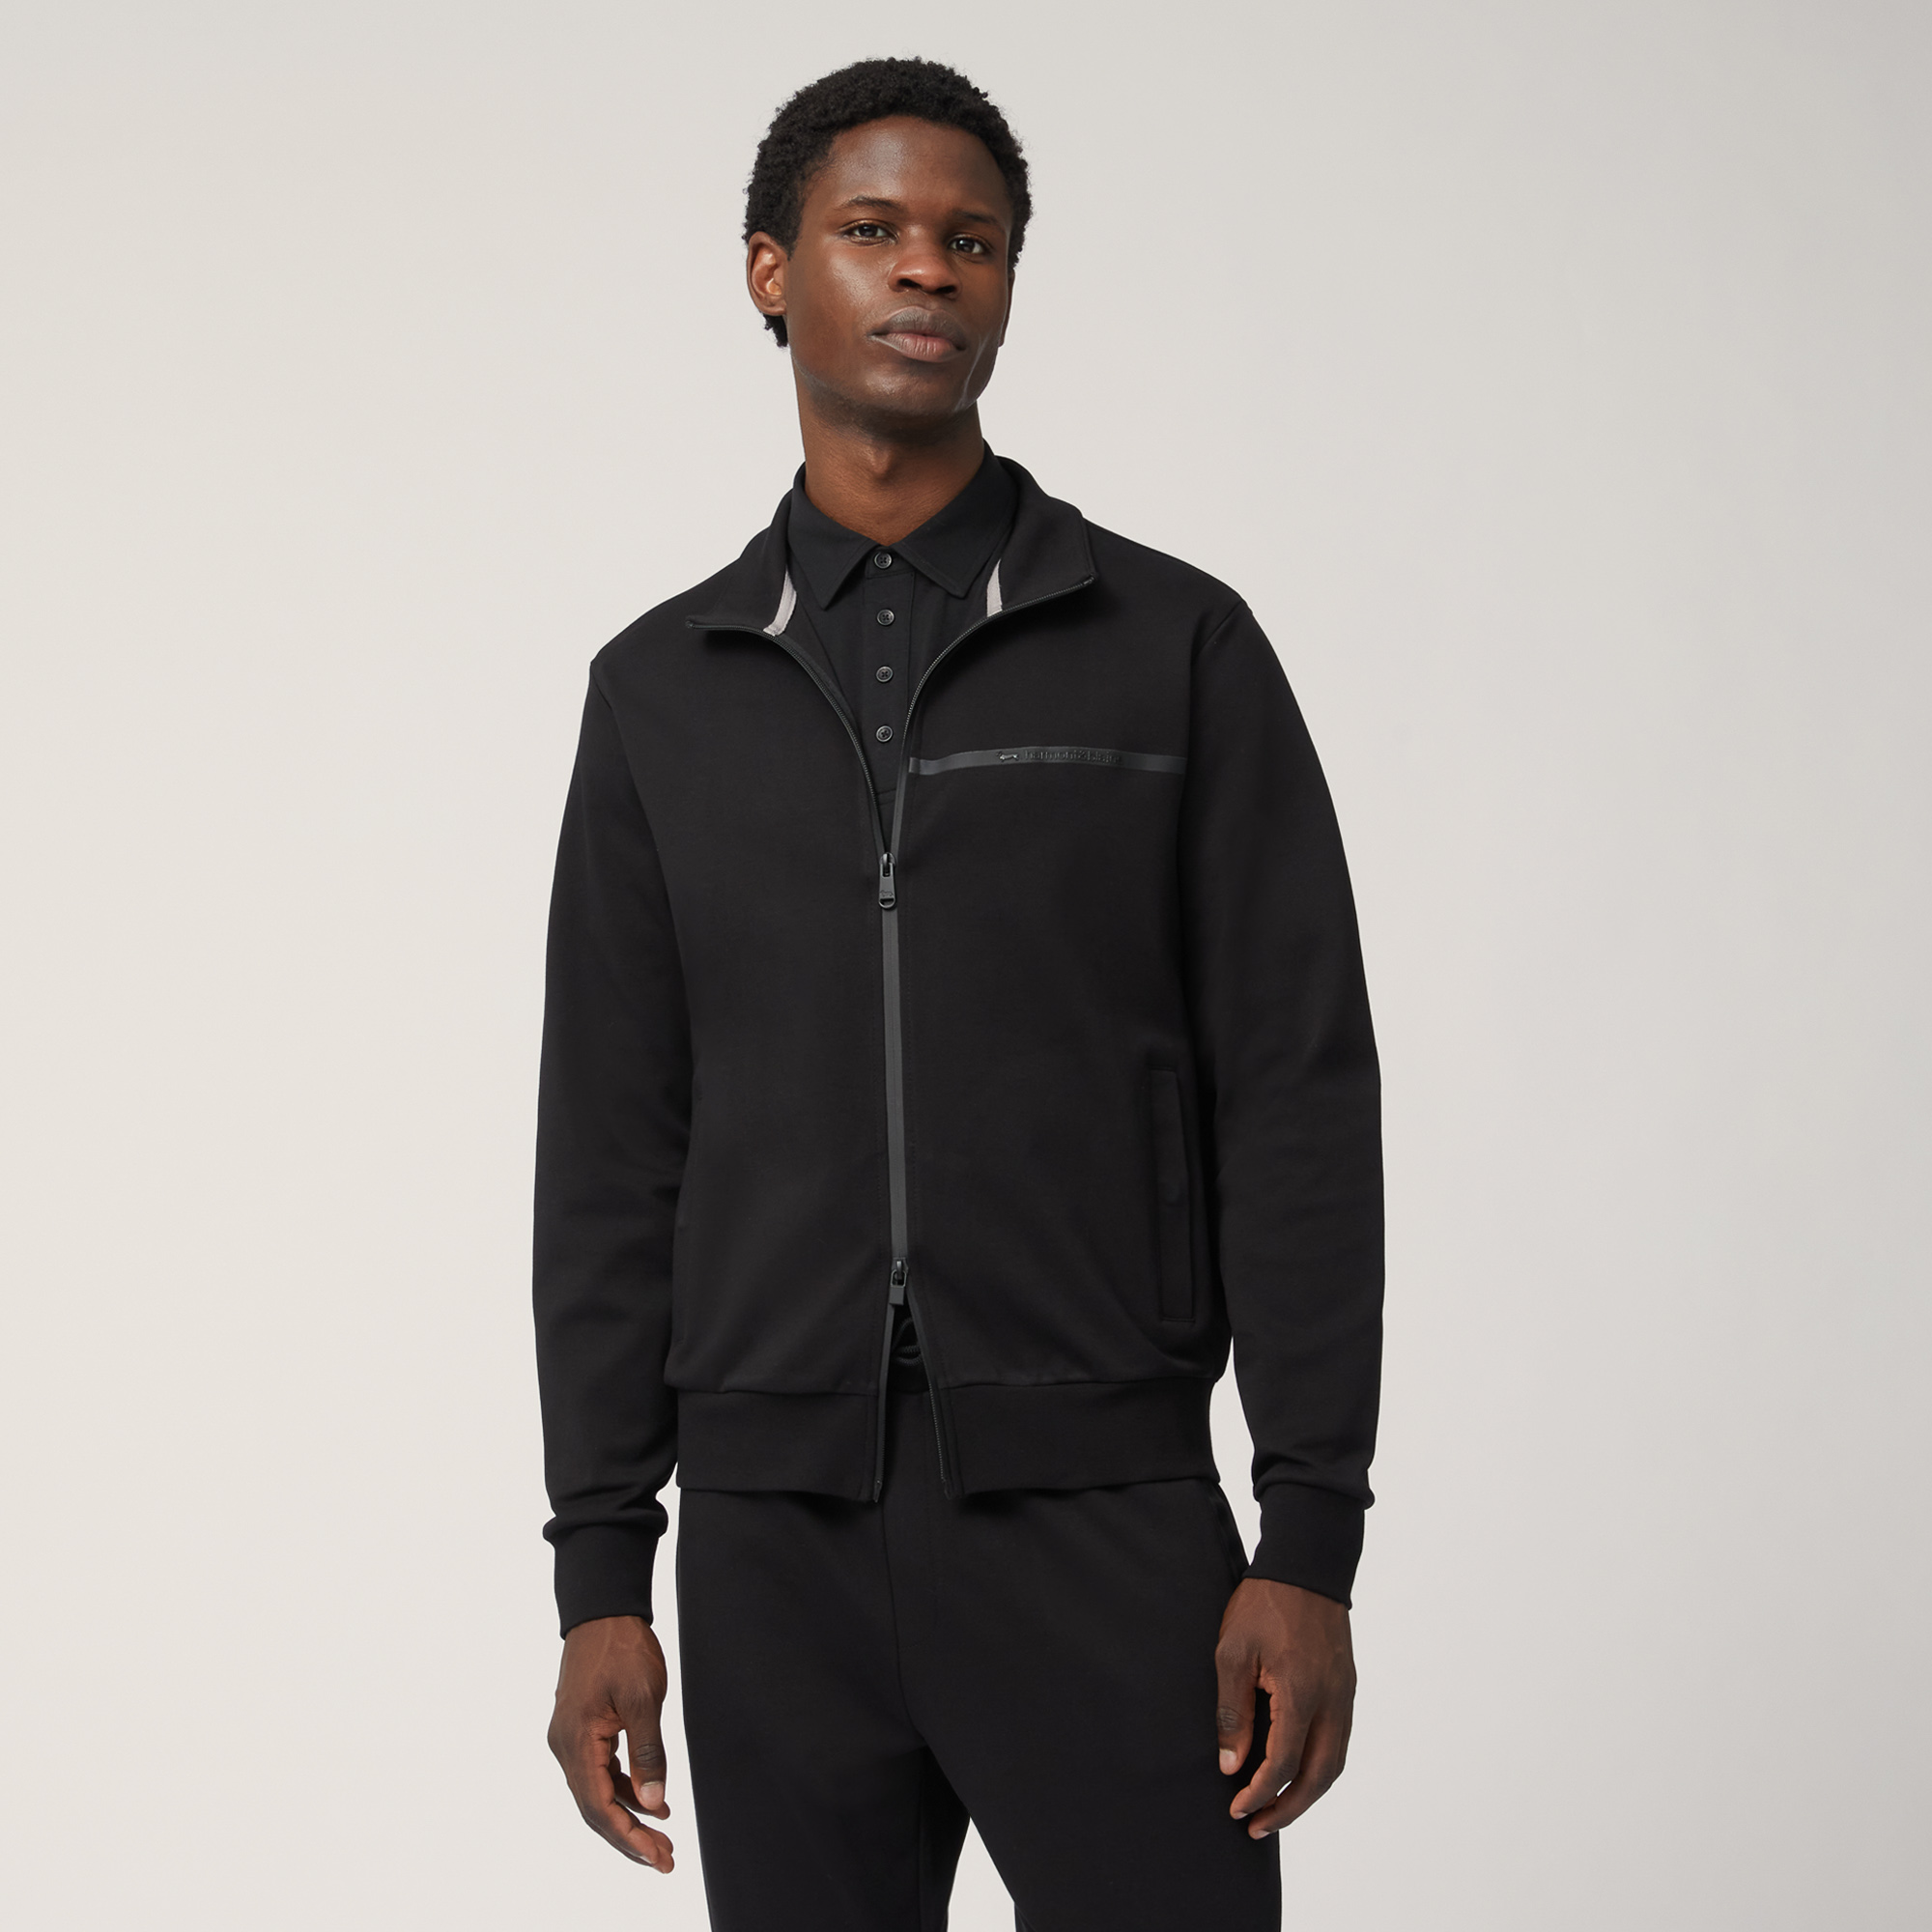 Cotton Full-Zip Sweatshirt with Heat-Sealed Details, Black, large image number 0